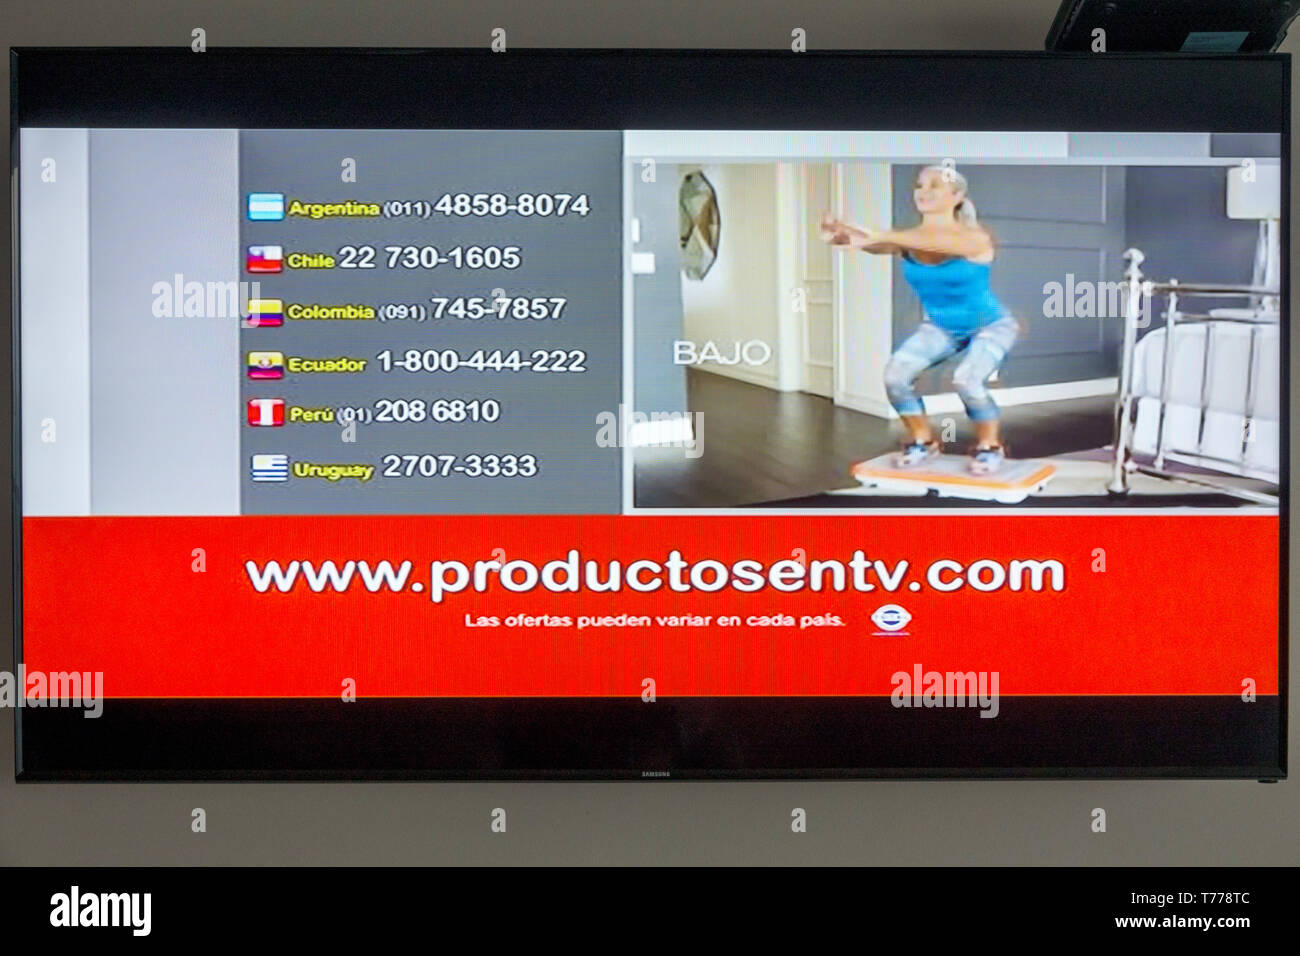 Cartagena Colombia,TV television monitor screen flat screen,www.productosentv.com,marketing,shopping channel,Latin America,telemarketing,visitors trav Stock Photo